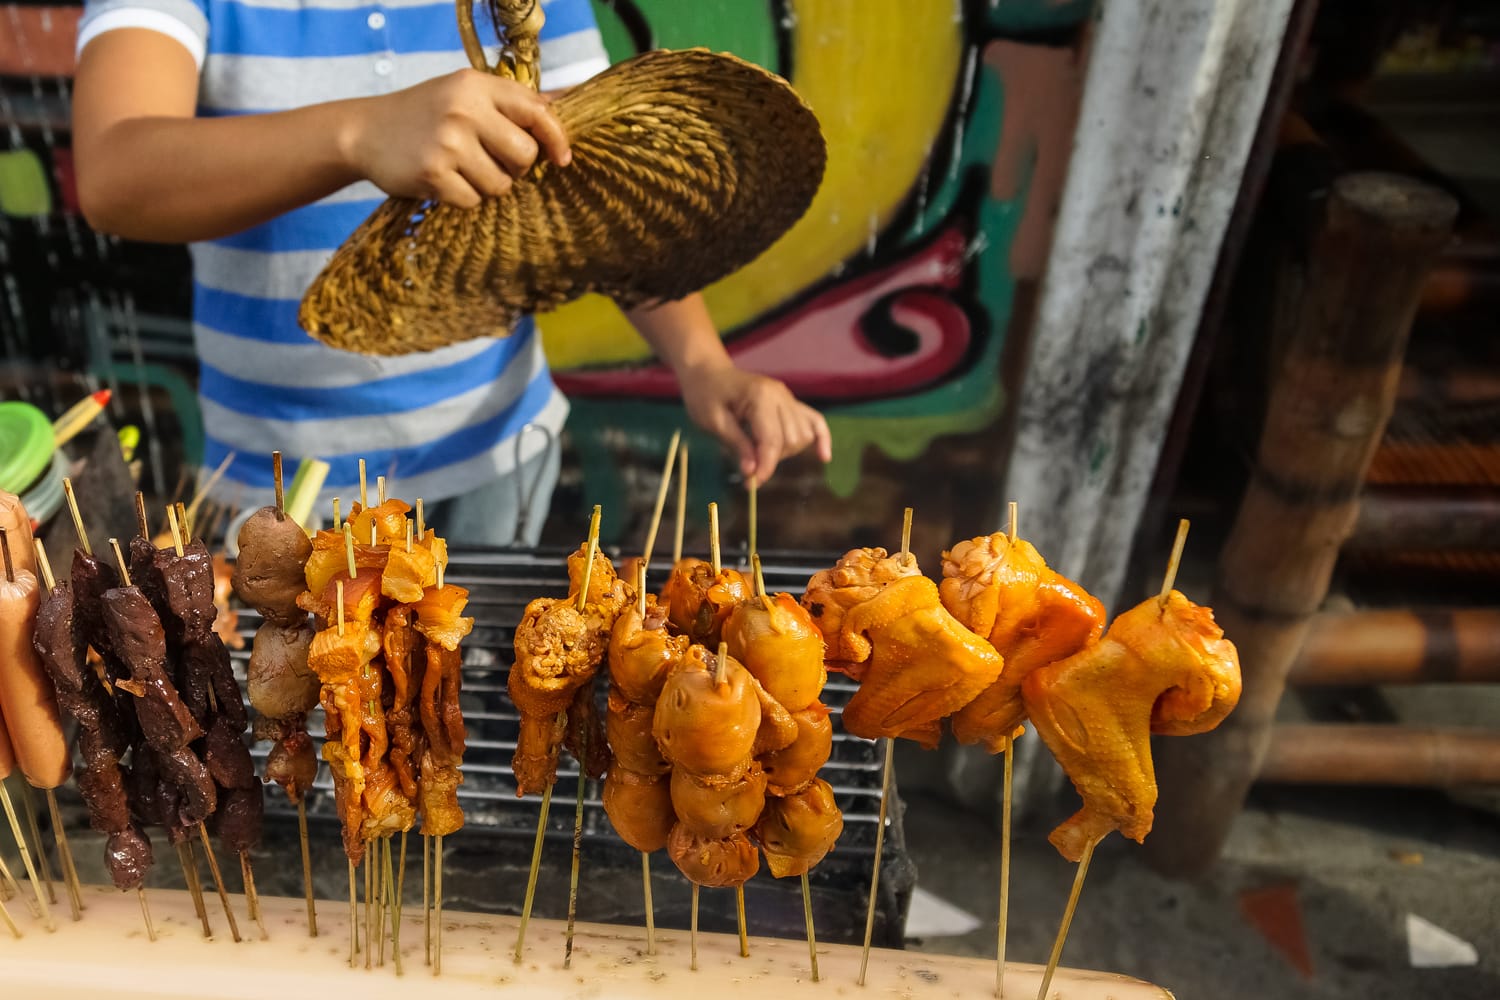 Filipino street food vendor with assortment of kabob meats on sticks